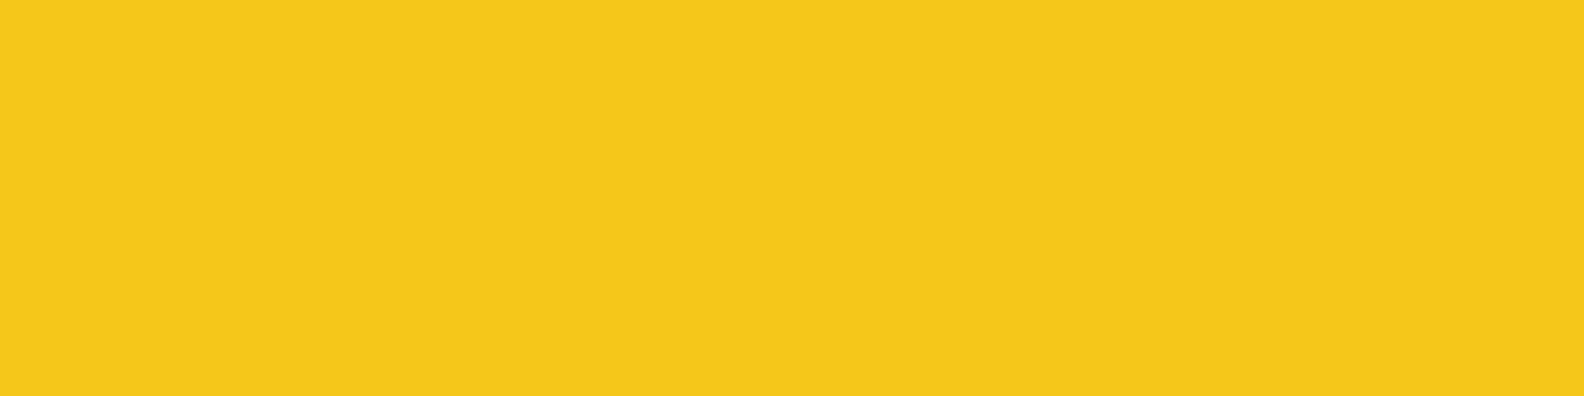 1584x396 Deep Lemon Solid Color Background